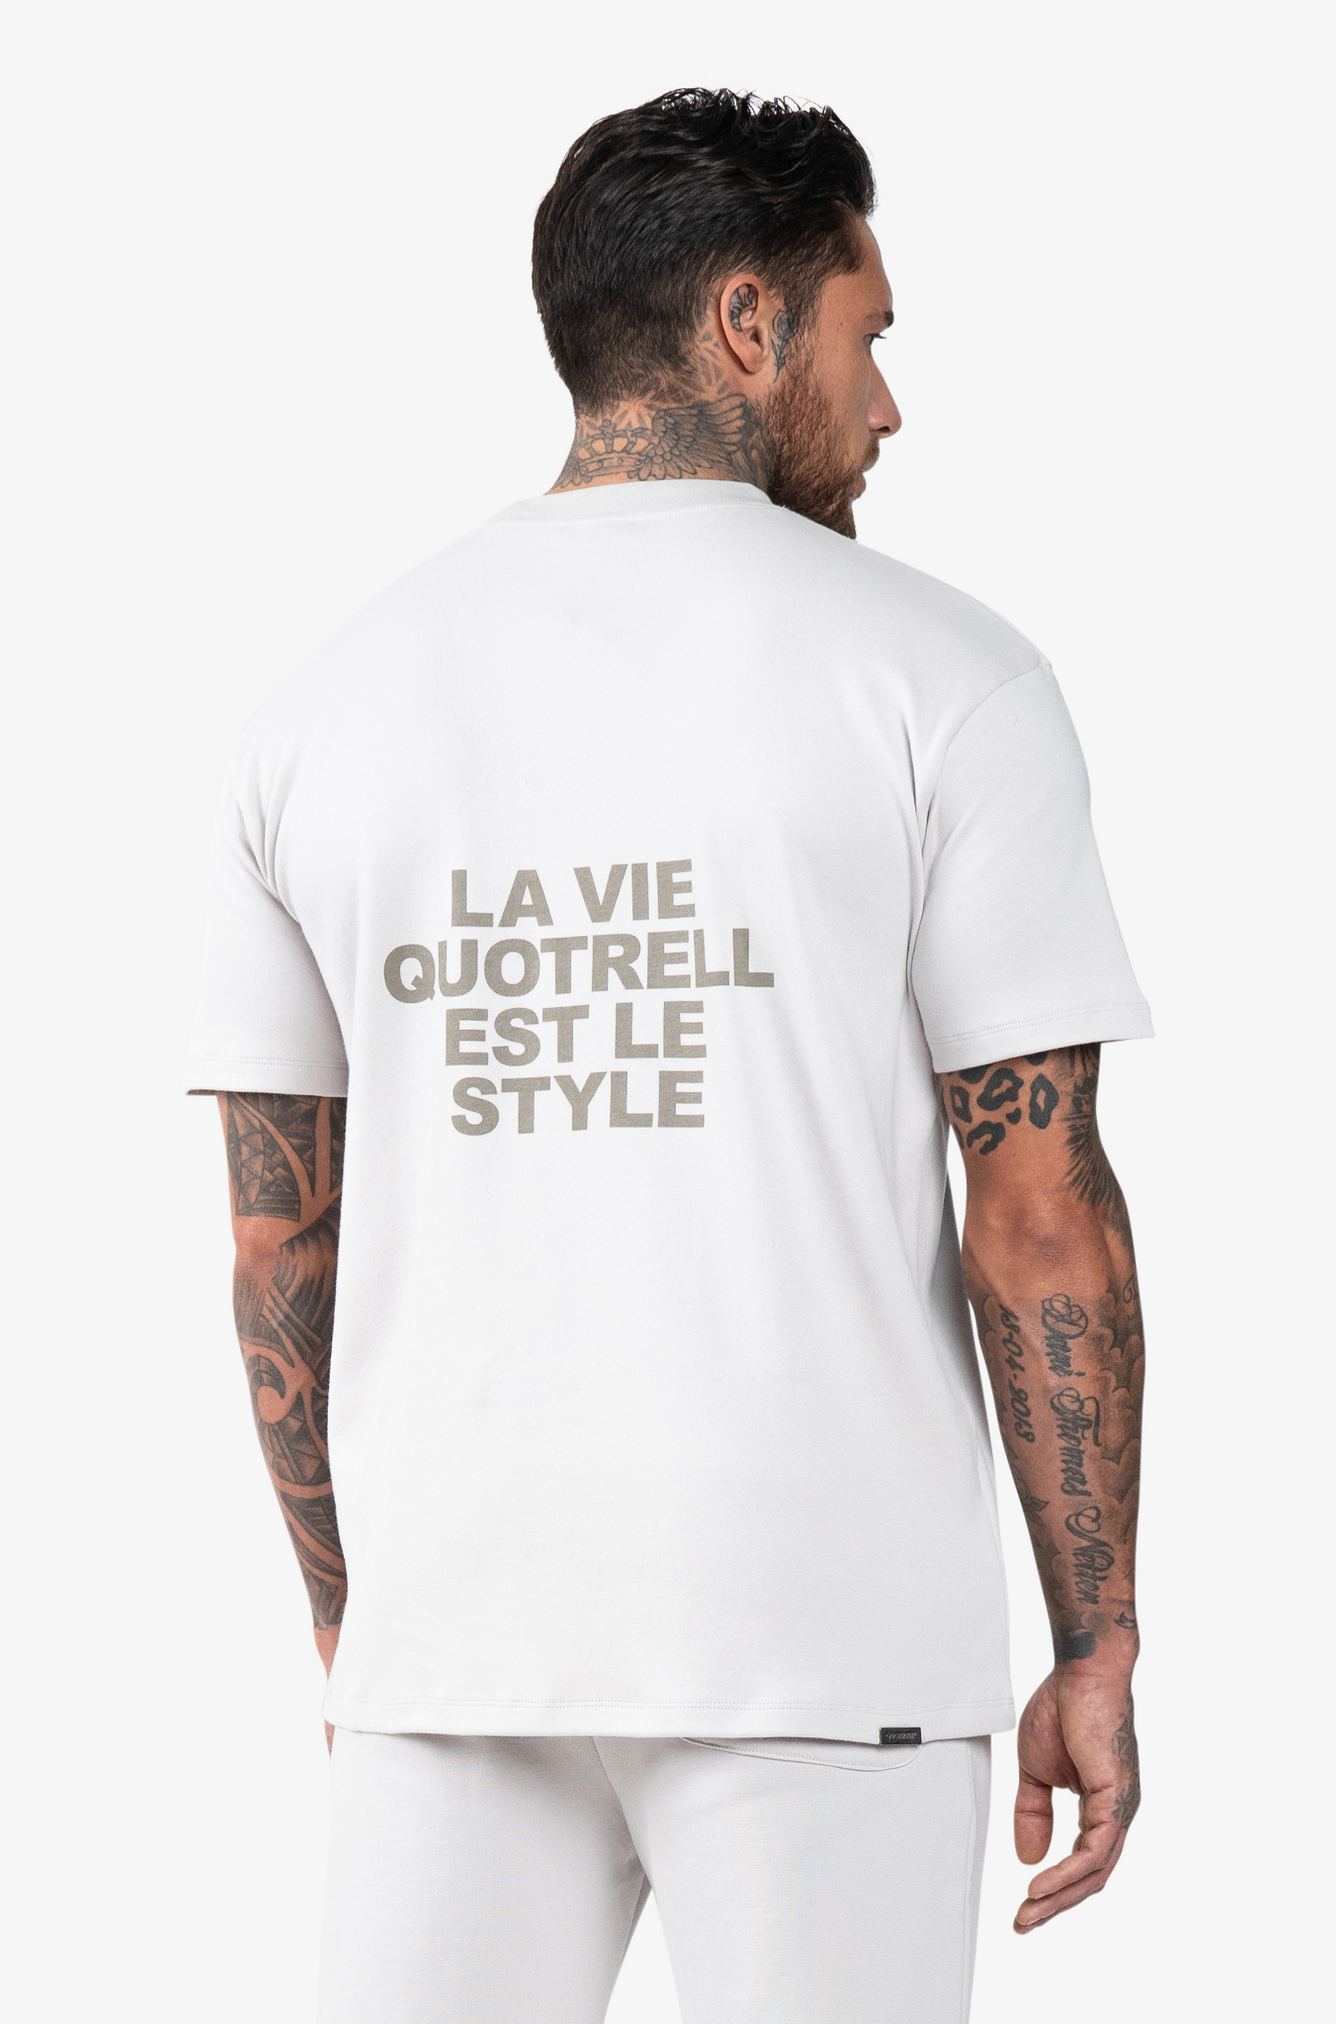 Quotrell La Vie T-Shirt